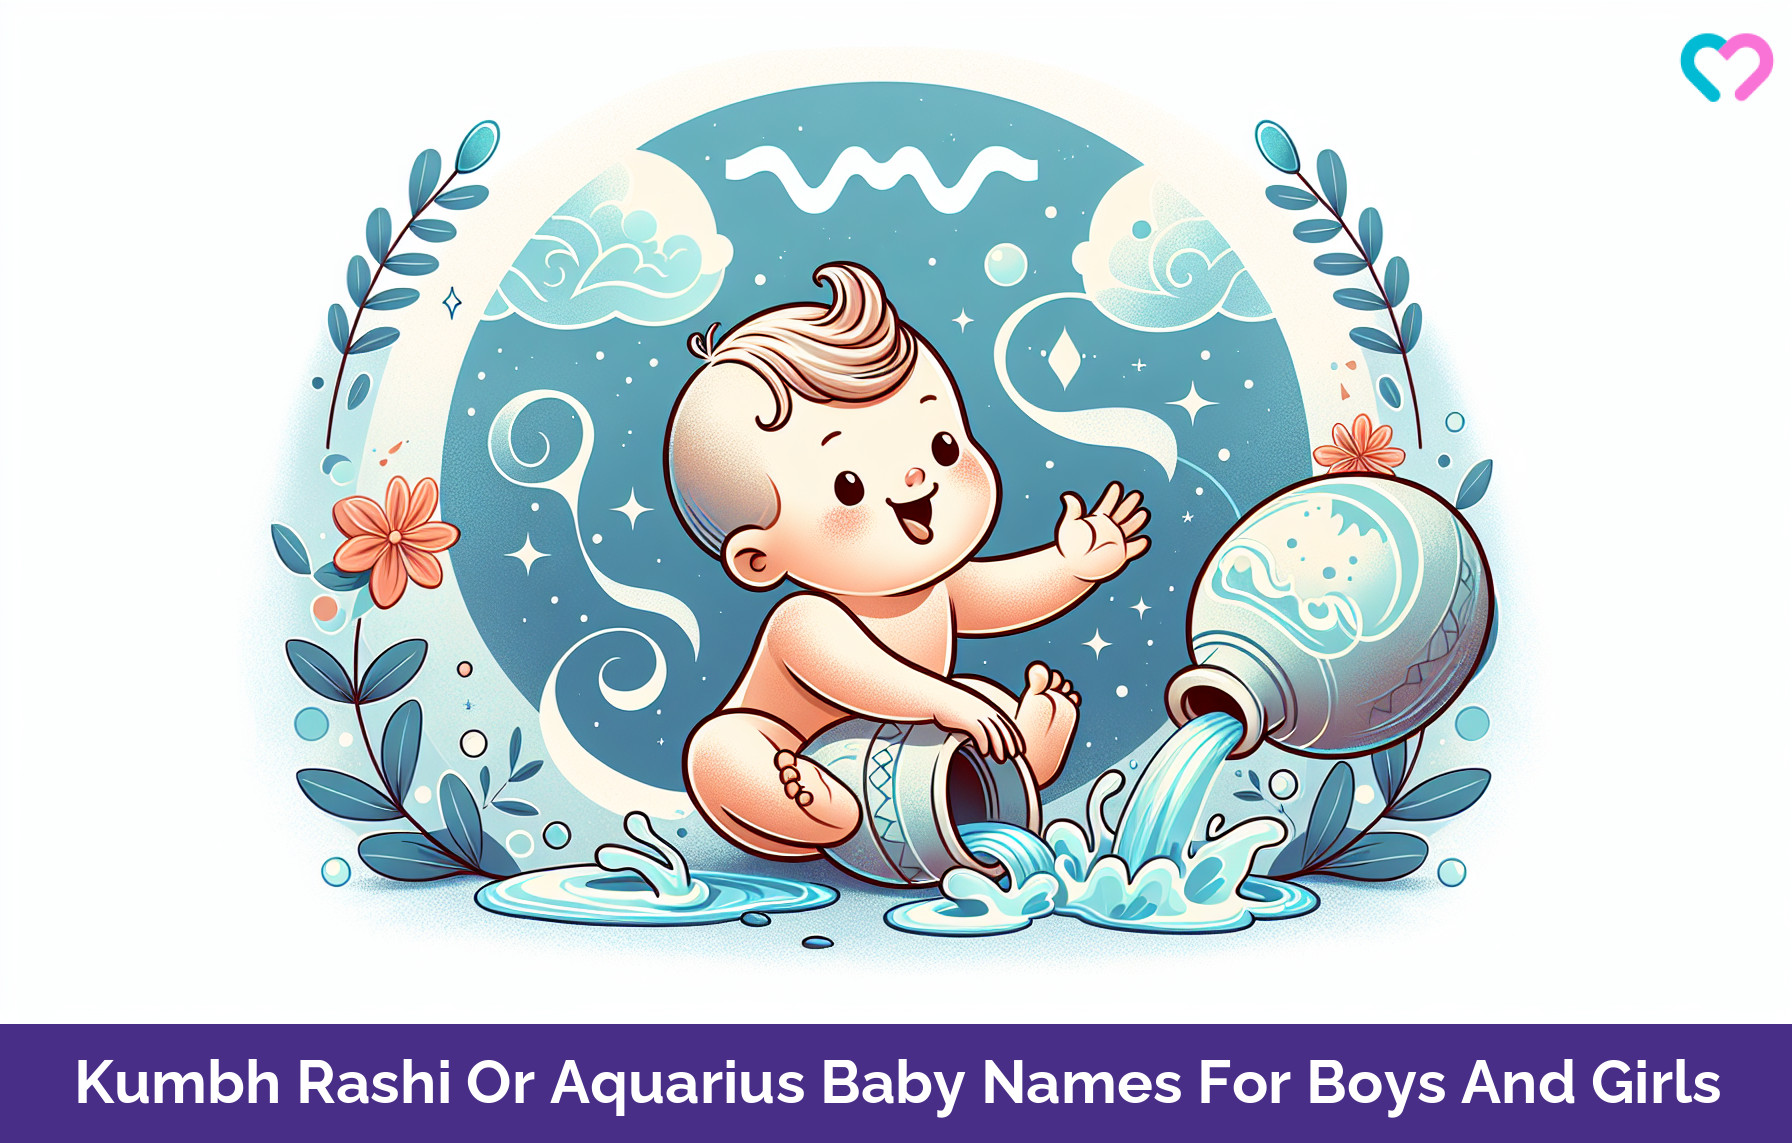 Khumbh Rashi names for boys and girls_illustration